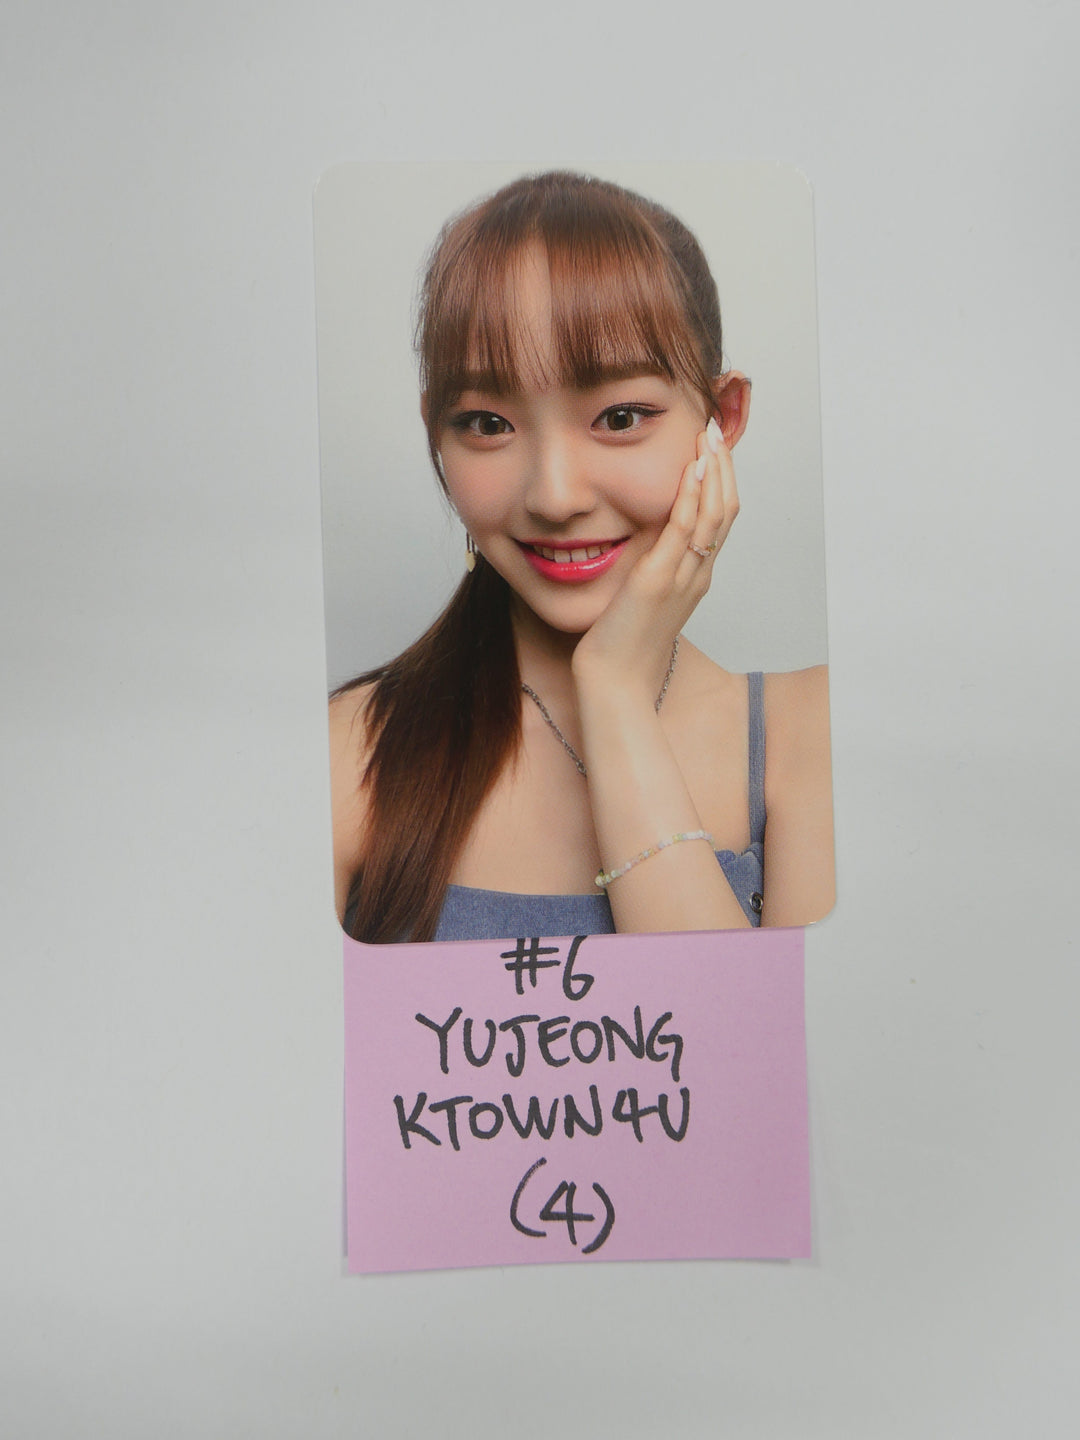 Lightsum 'Vanilla' - Ktown4U Fan Sign Event Photocard